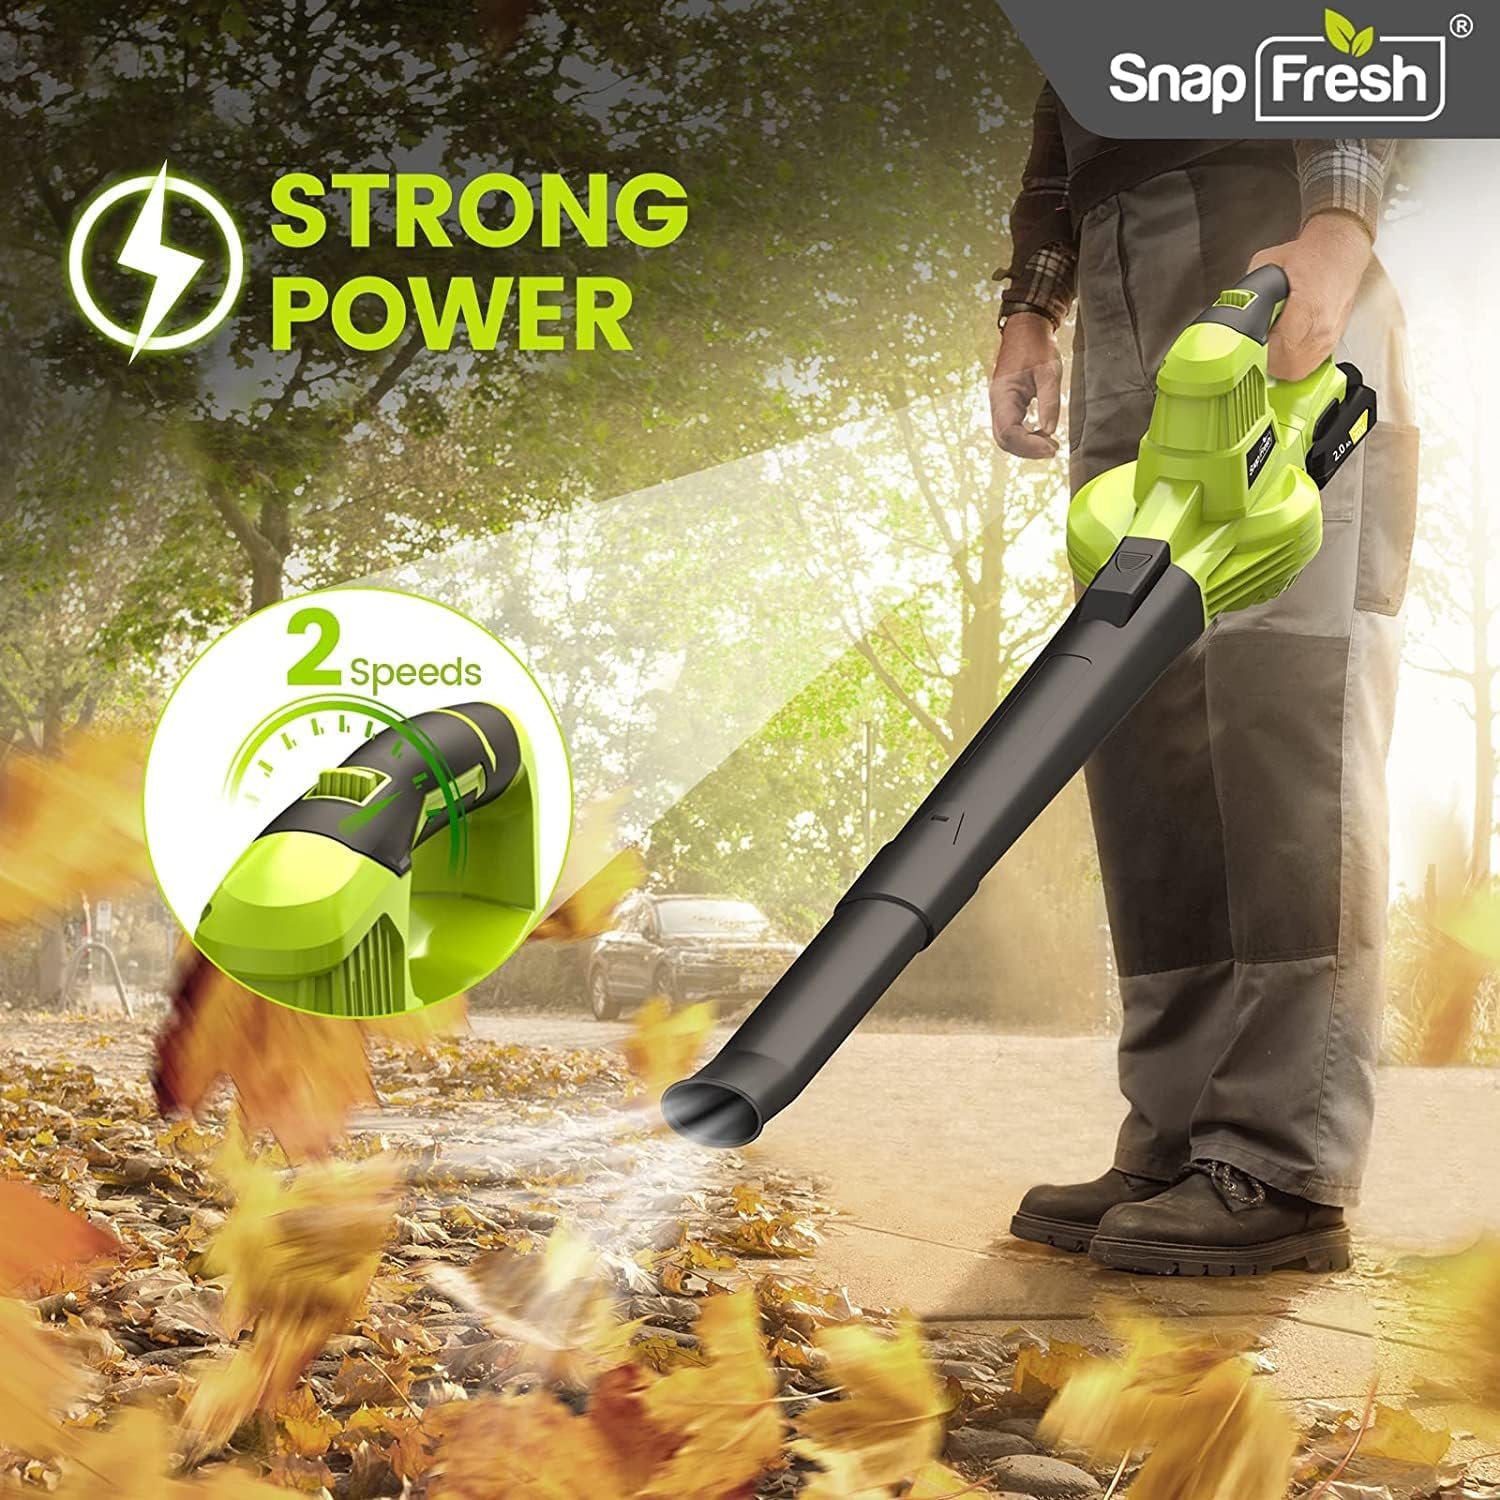 SnapFresh Leaf Blower Review